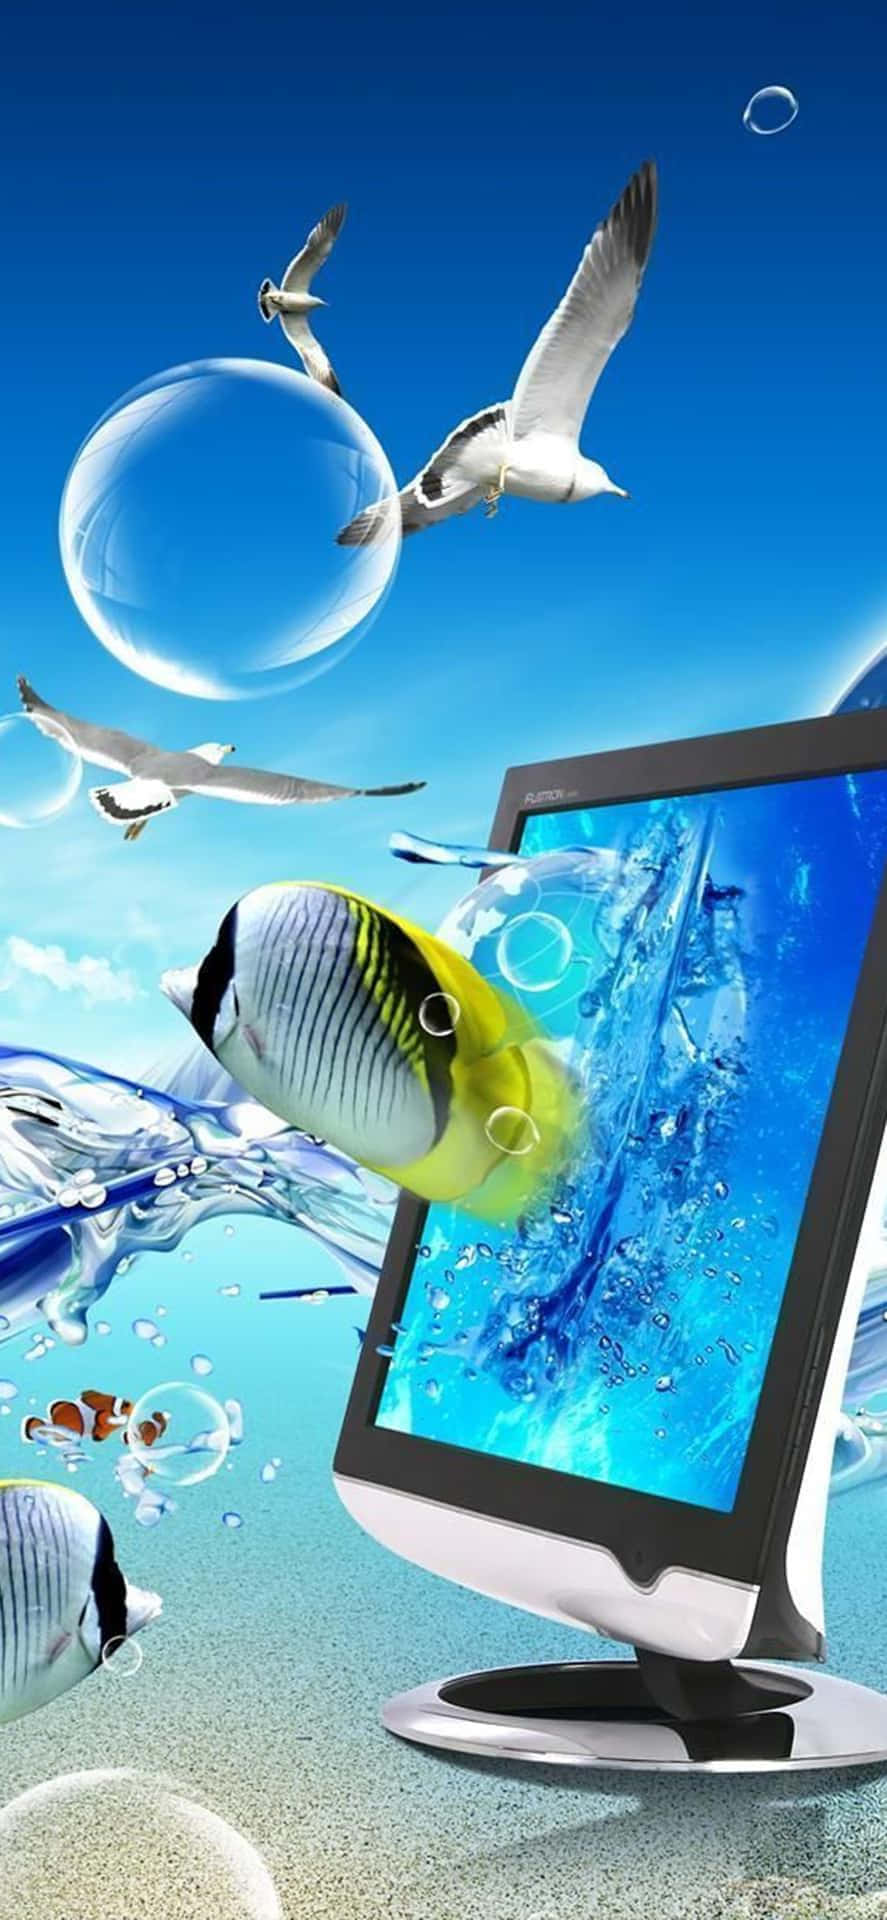 Surreal Underwater Computer World Wallpaper